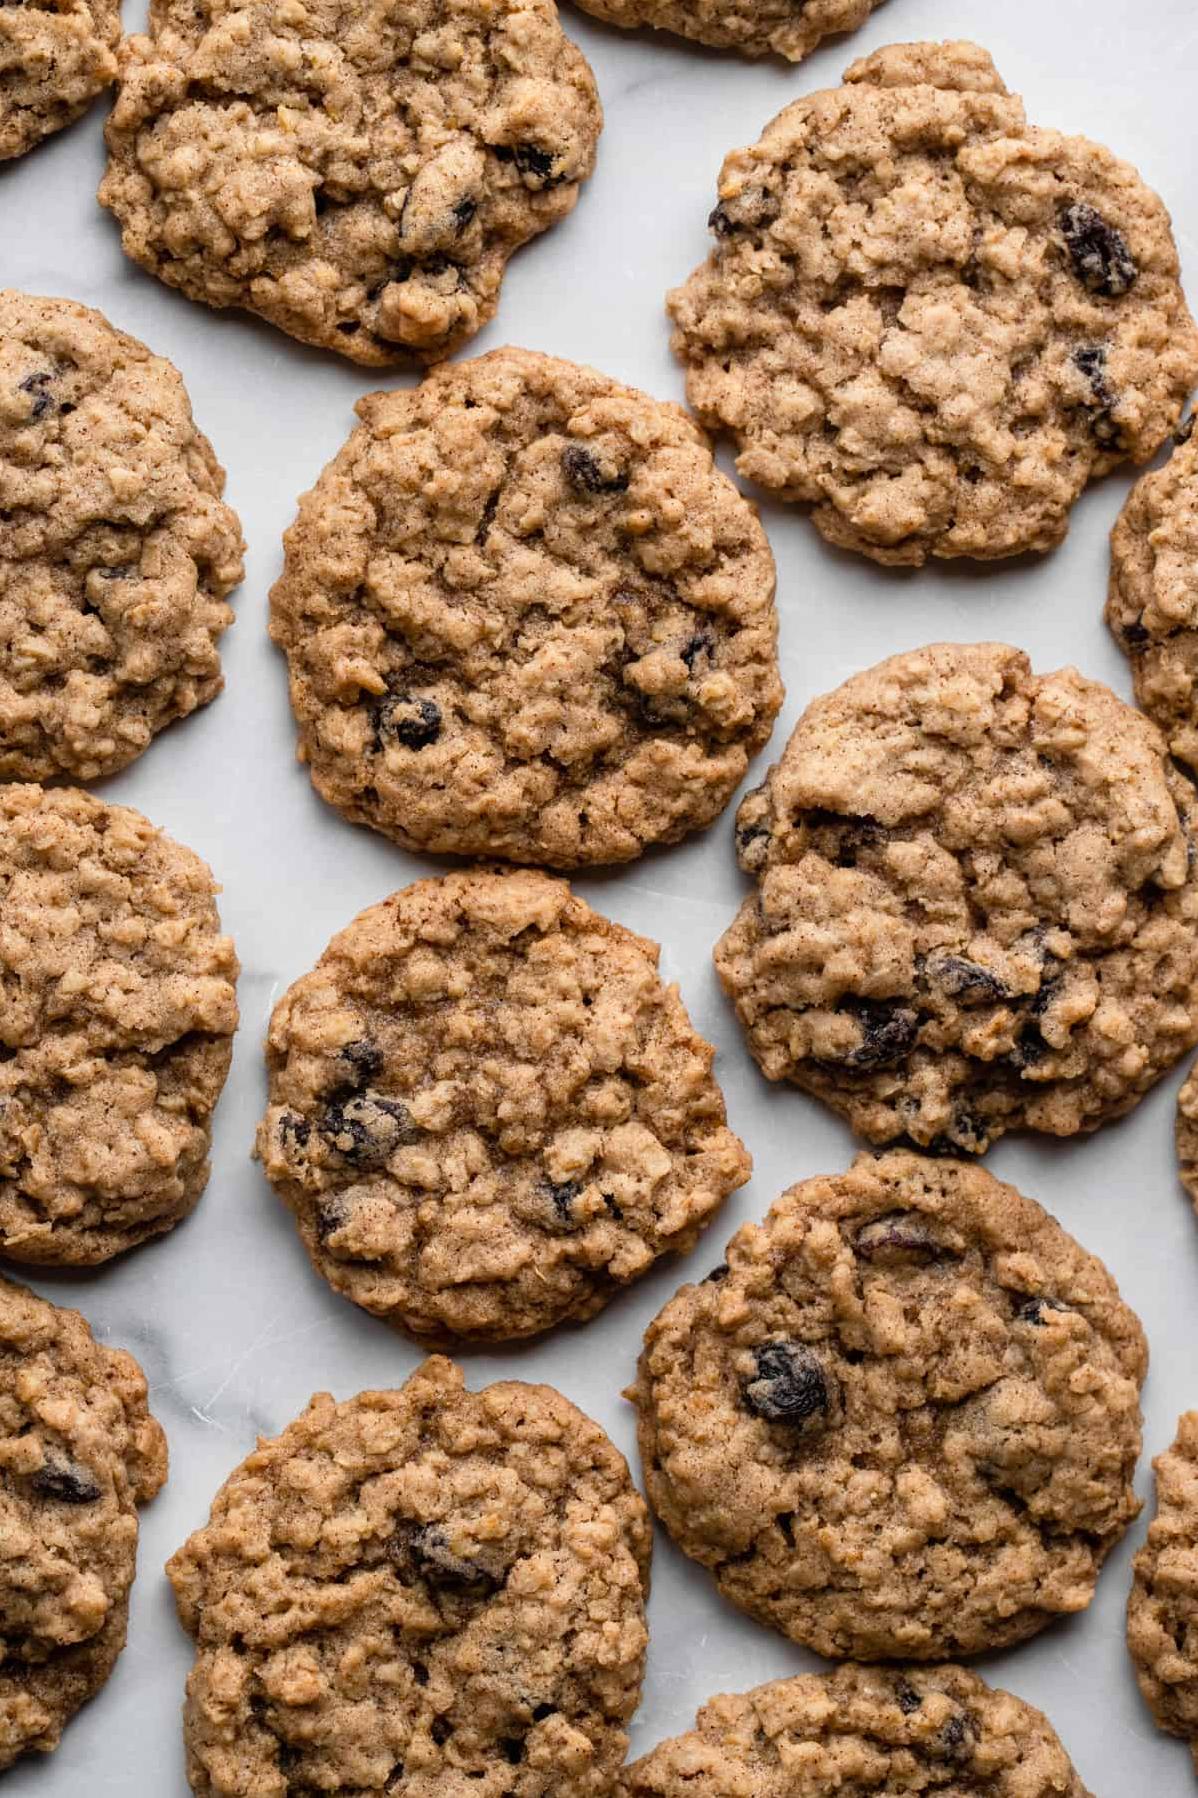  Oatmeal raisin cookies just got a vegan-friendly makeover!